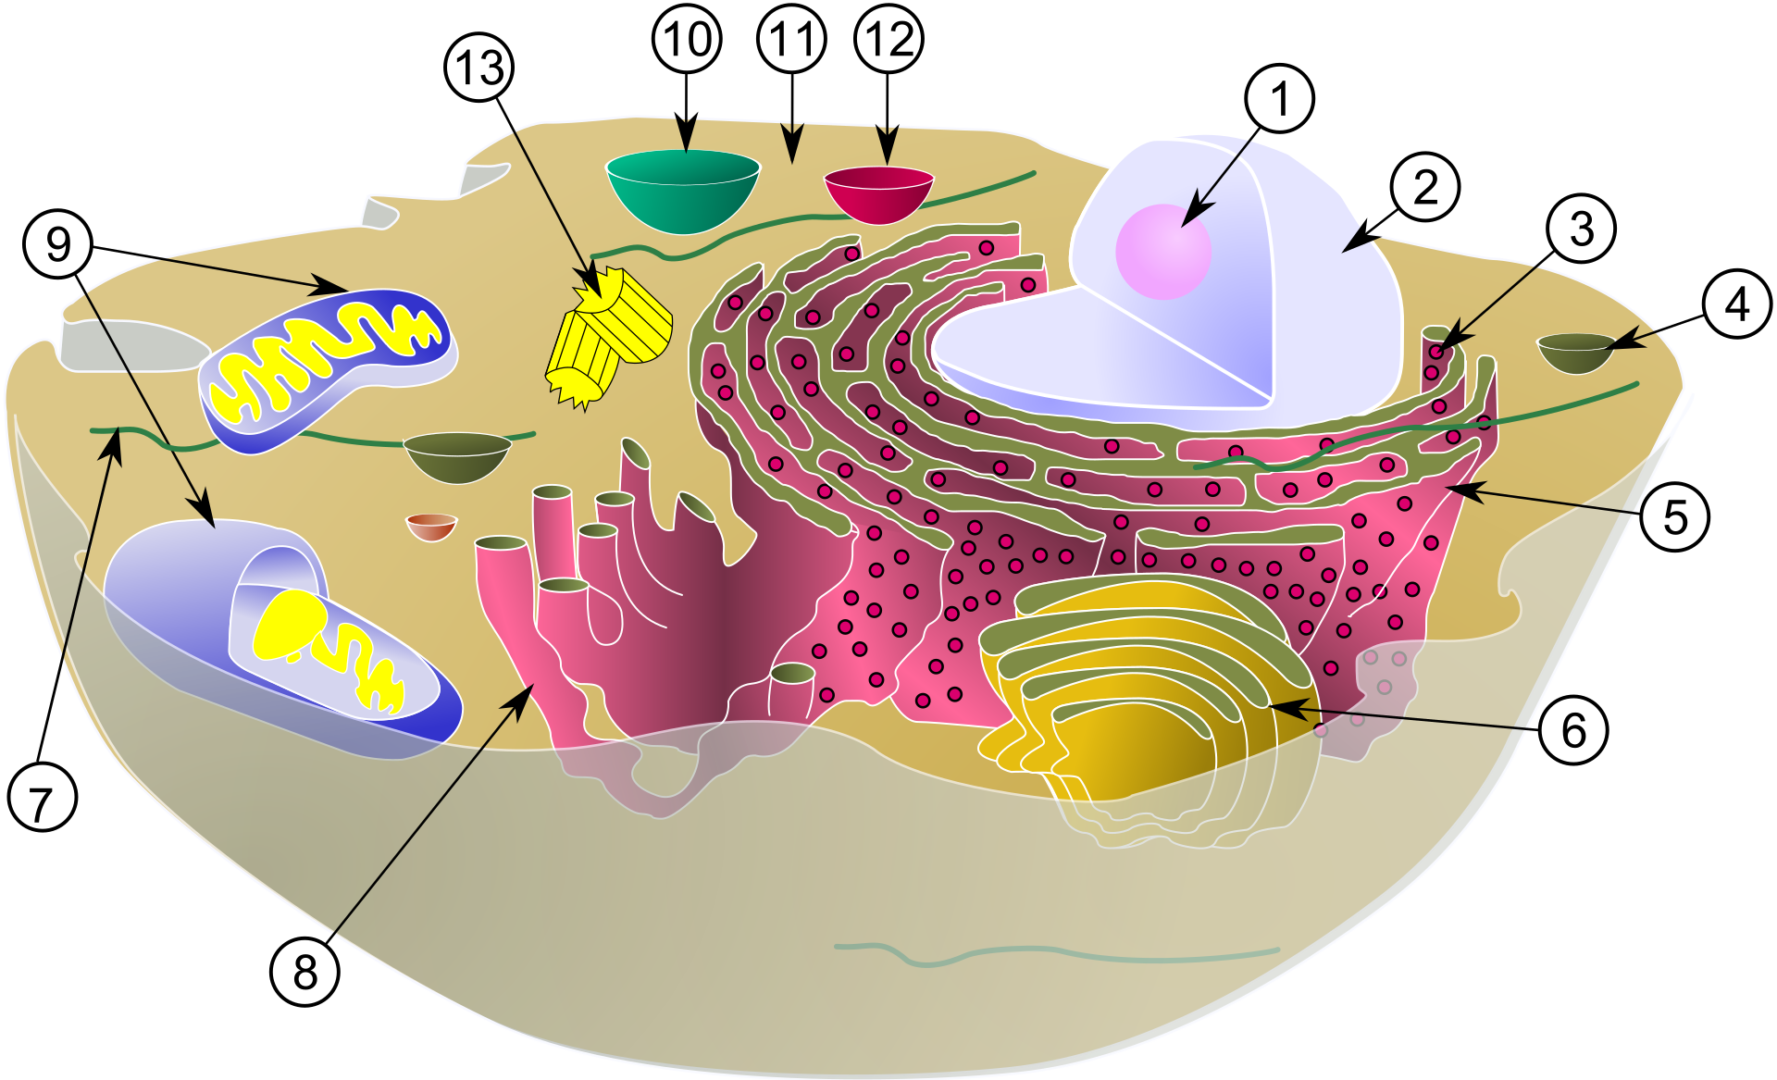 Eukariotische Zelle: 1. Nucleolus (Kernkörperchen) 2. Zellkern (Nukleus) 3. Ribosomen 4. Vesikel 5. Raues (Granuläres) ER (Ergastoplasma) 6. Golgi-Apparat 7. Cytoskelett 8. Glattes (Agranuläres) ER 9. Mitochondrien 10. Lysosom 11. Cytoplasma (mit Cytosol und Cytoskelett) 12. Peroxisomen